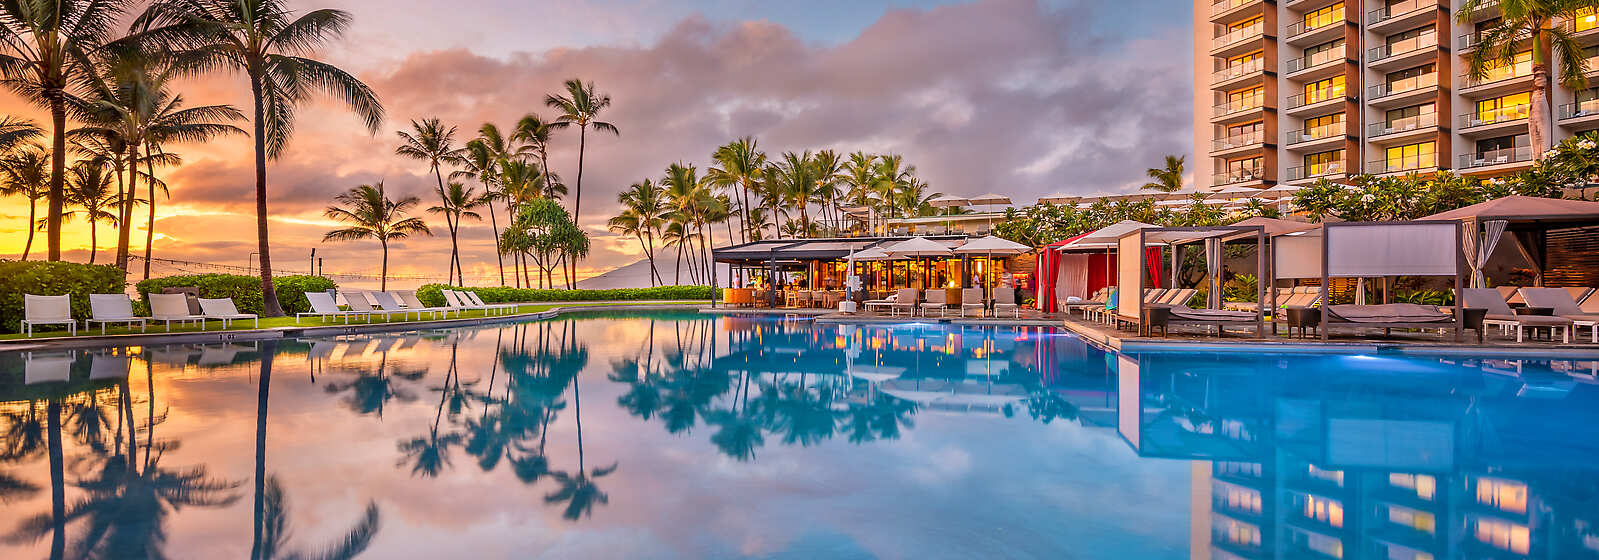 Andaz Maui Resort at sunset 